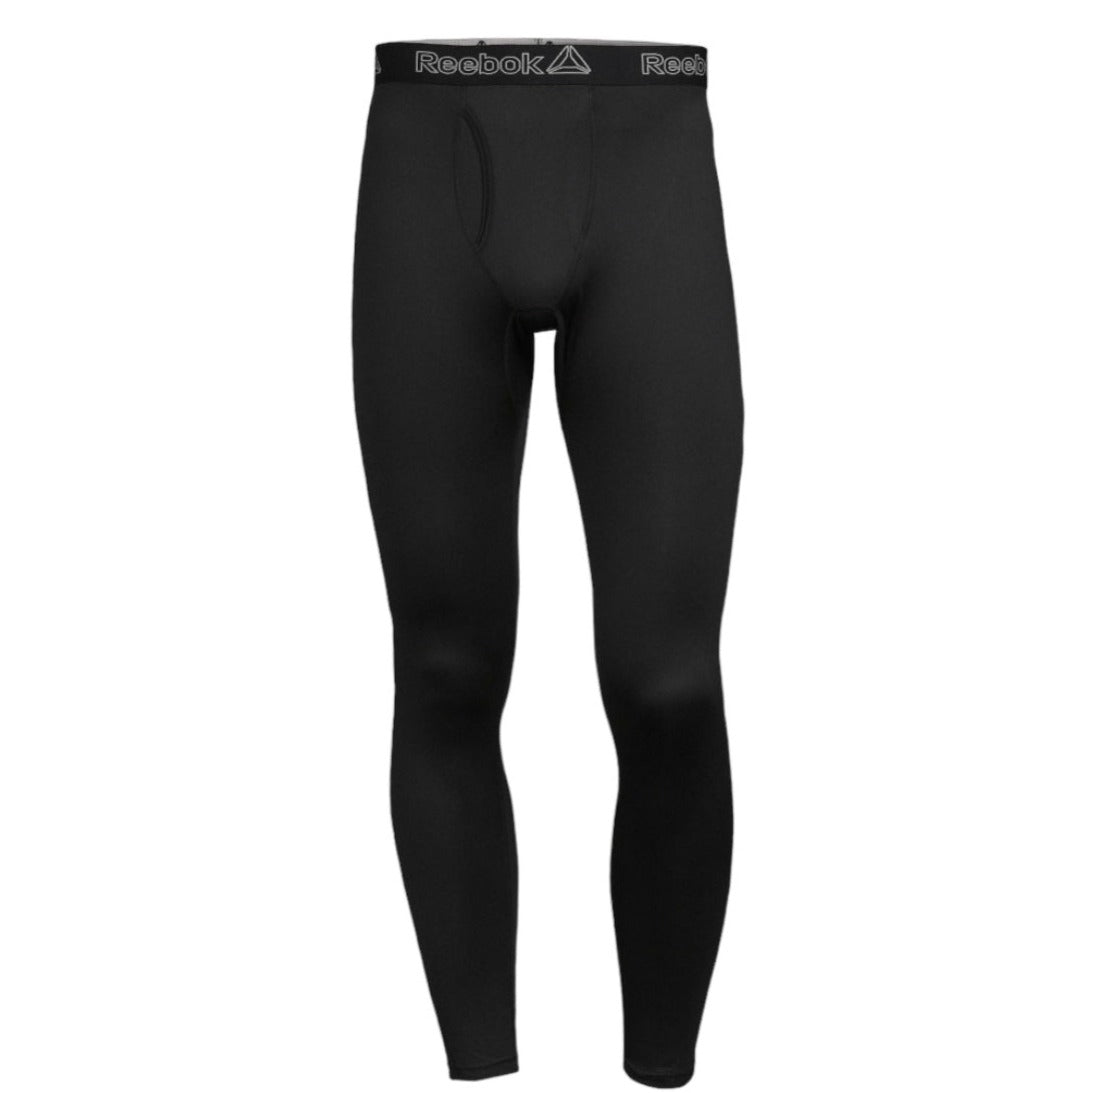 New Reebok Men's Performance Base Layer Pant, Pro Series, Black, 2XL (44-46 In) long johns thermal underwear